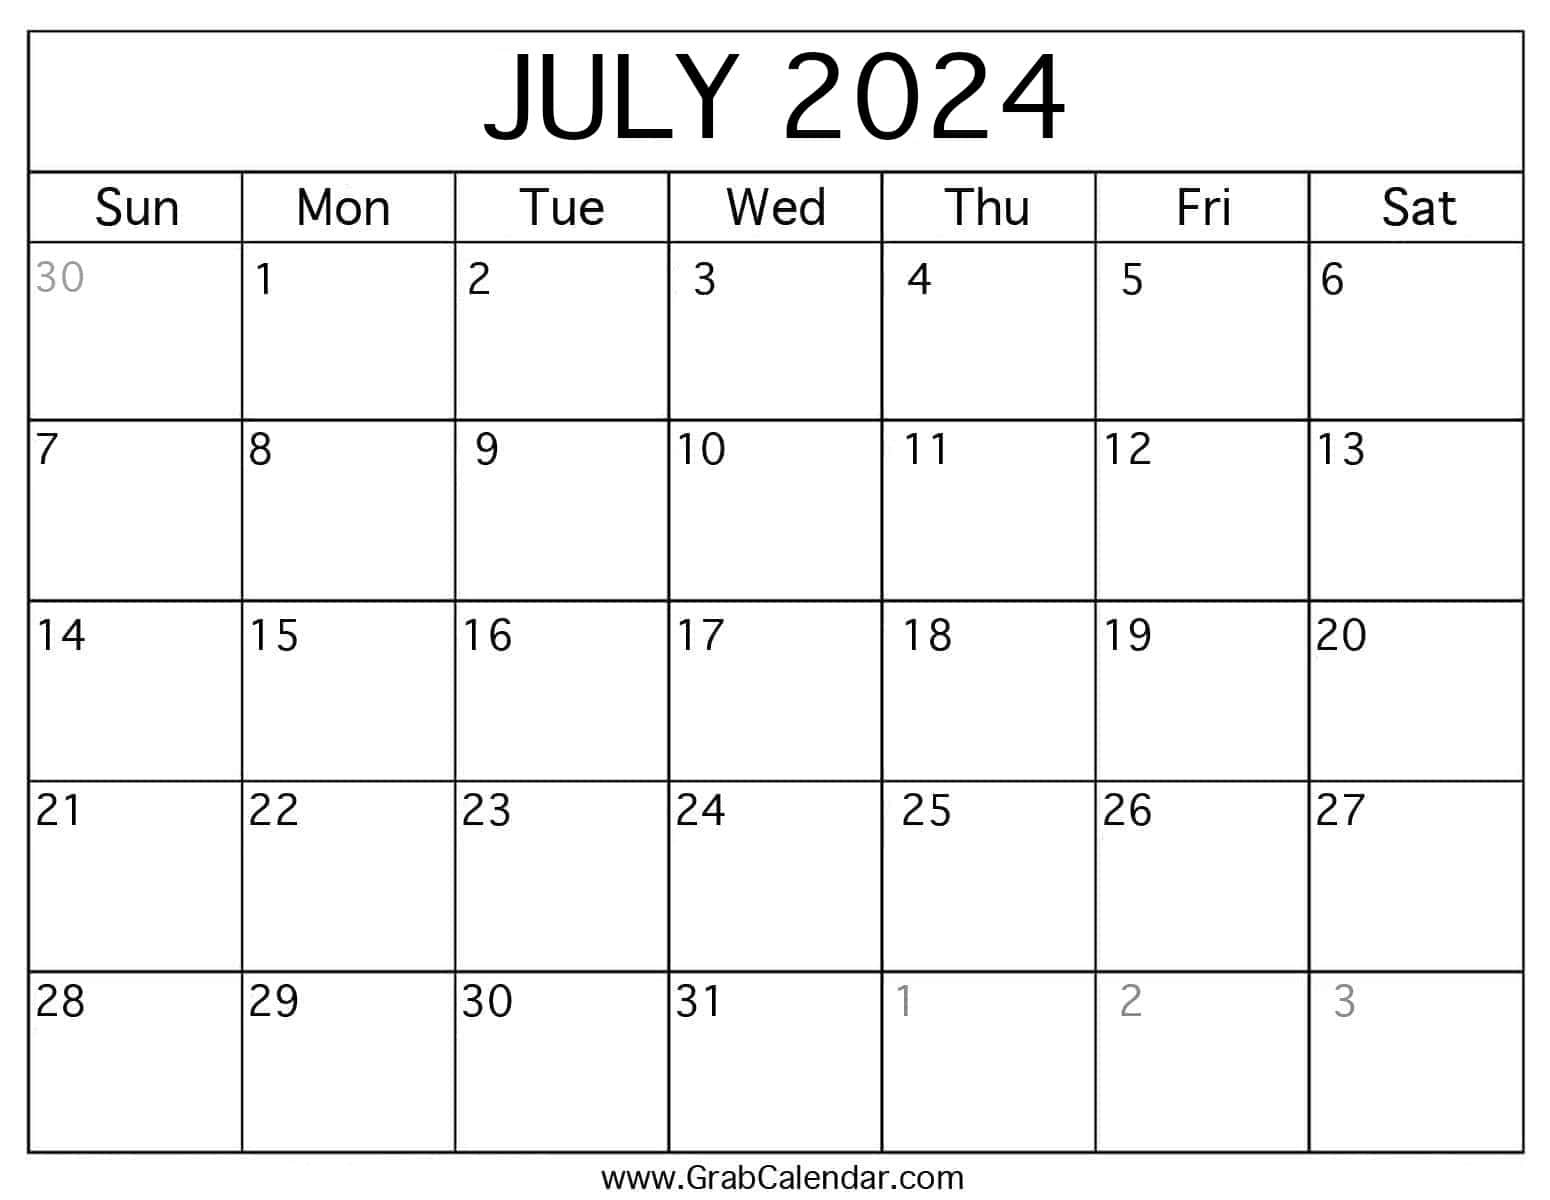 Printable July 2024 Calendar in 13 Month Calendar Starting July 2024